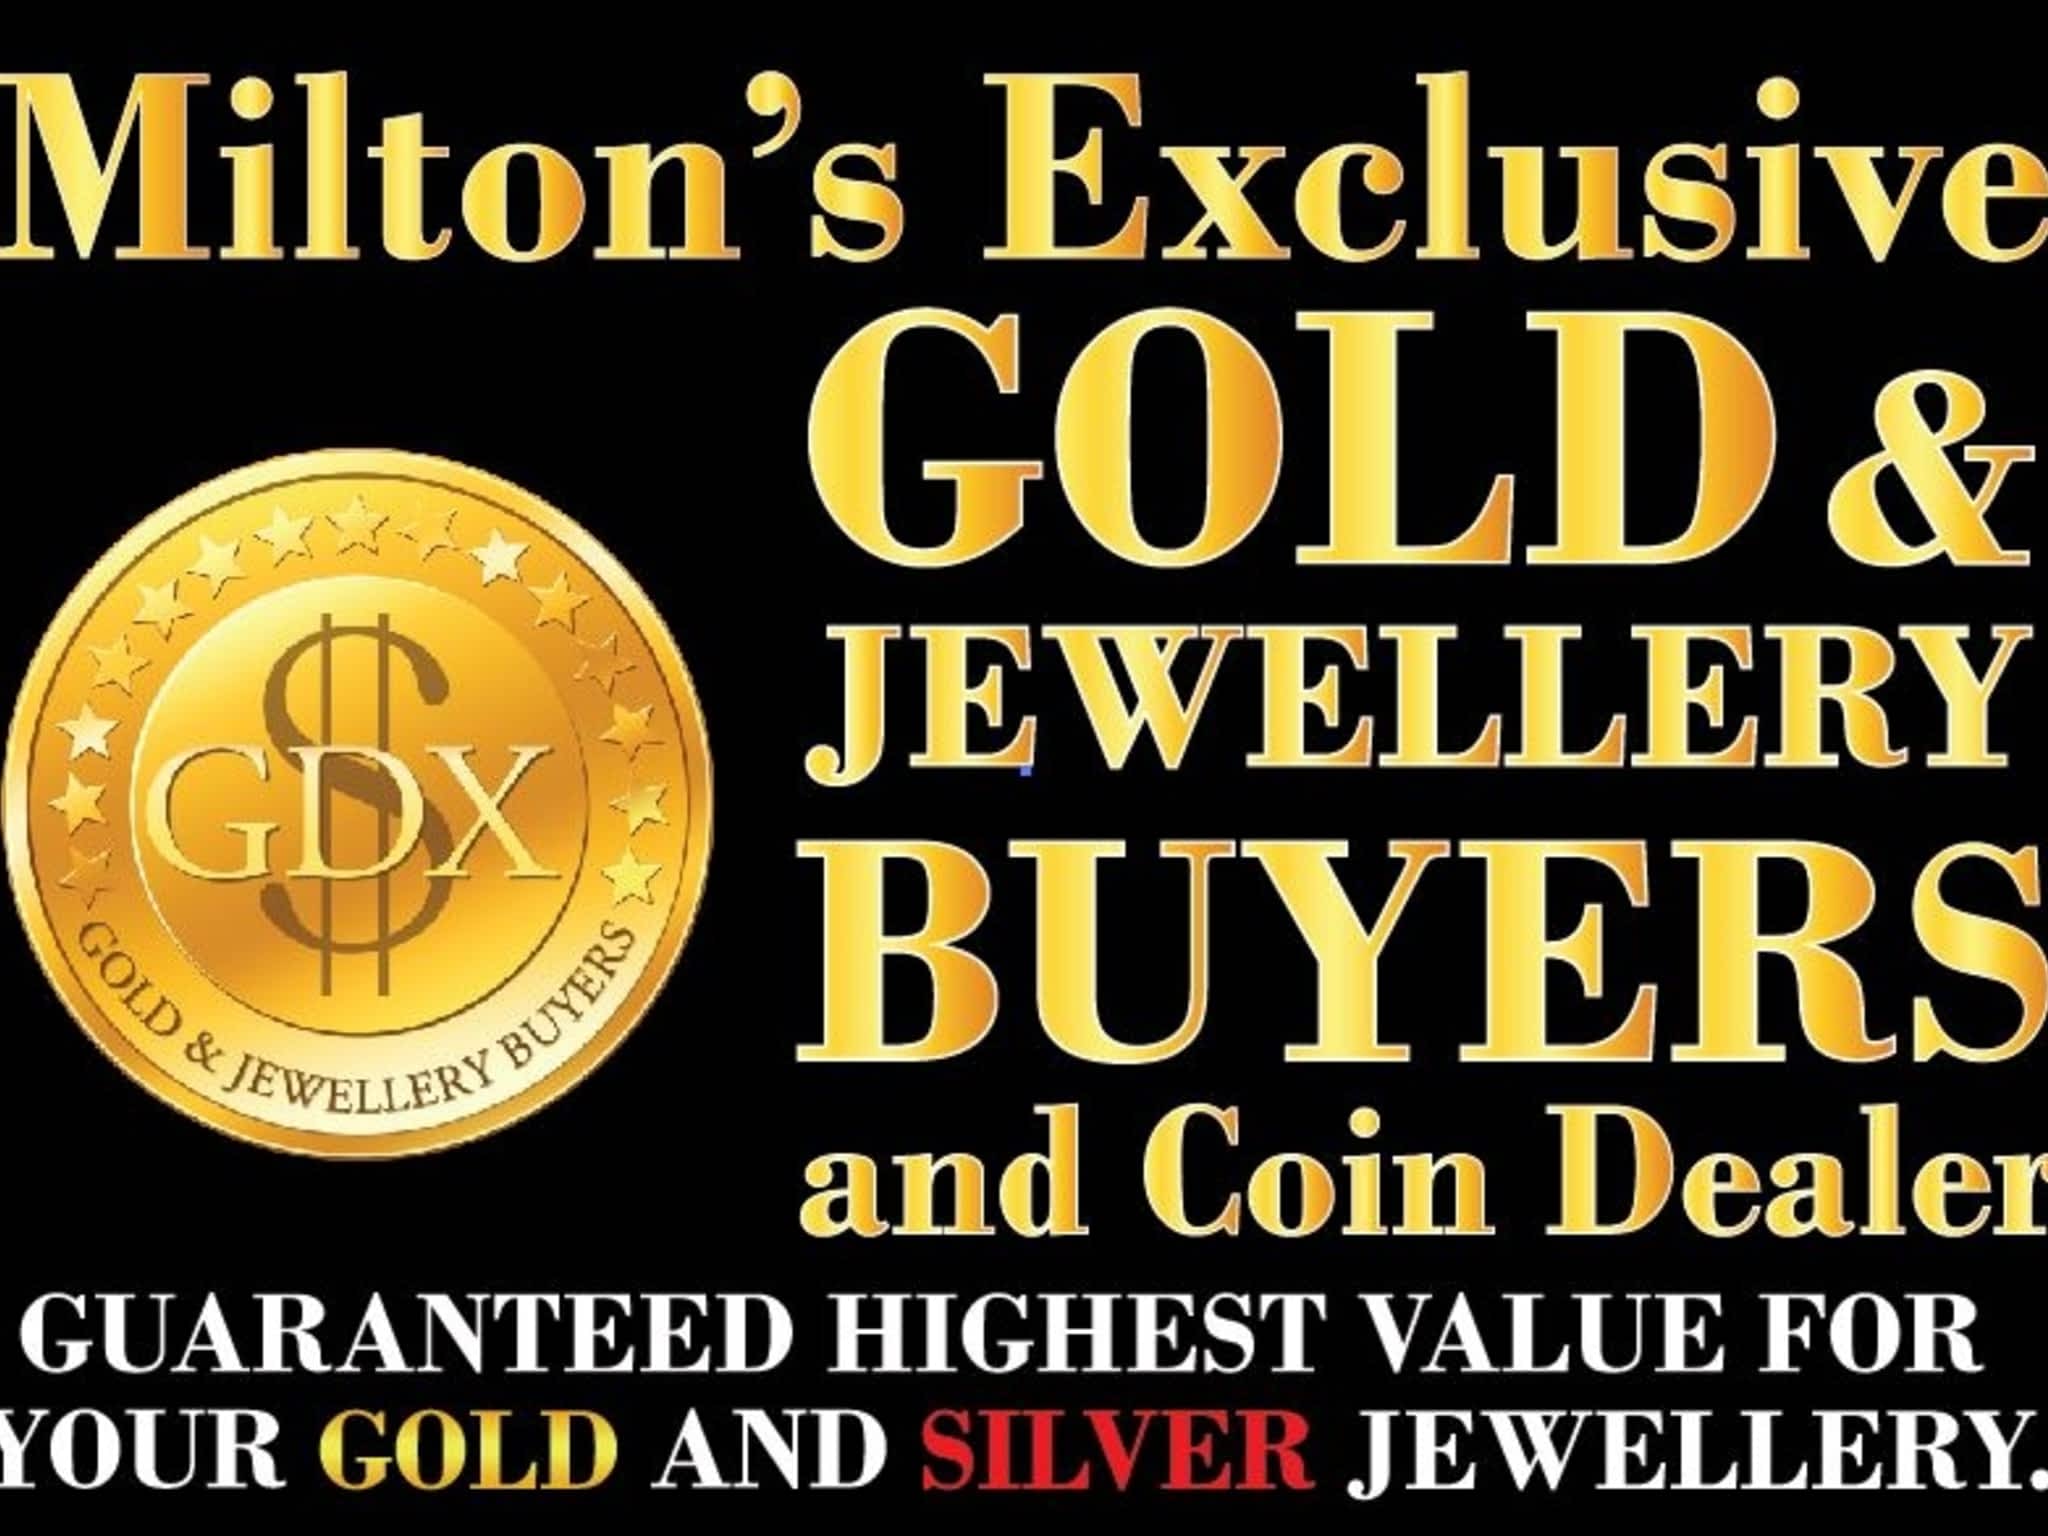 photo Gold Dollar Exchange Gold & Jewellery Buyers